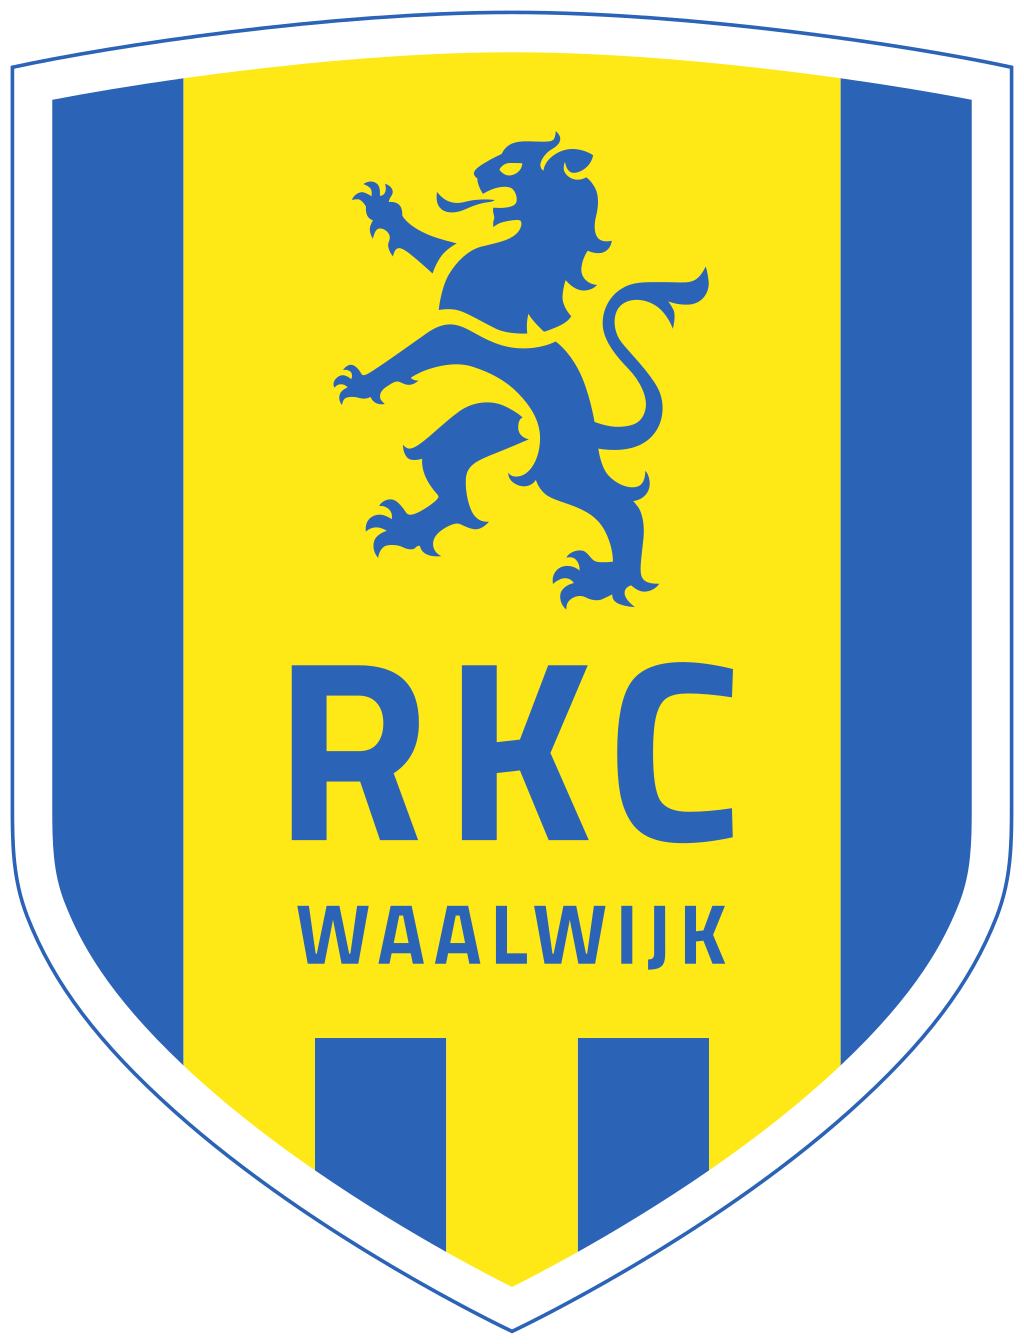 Programme TV RKC Waalwijk